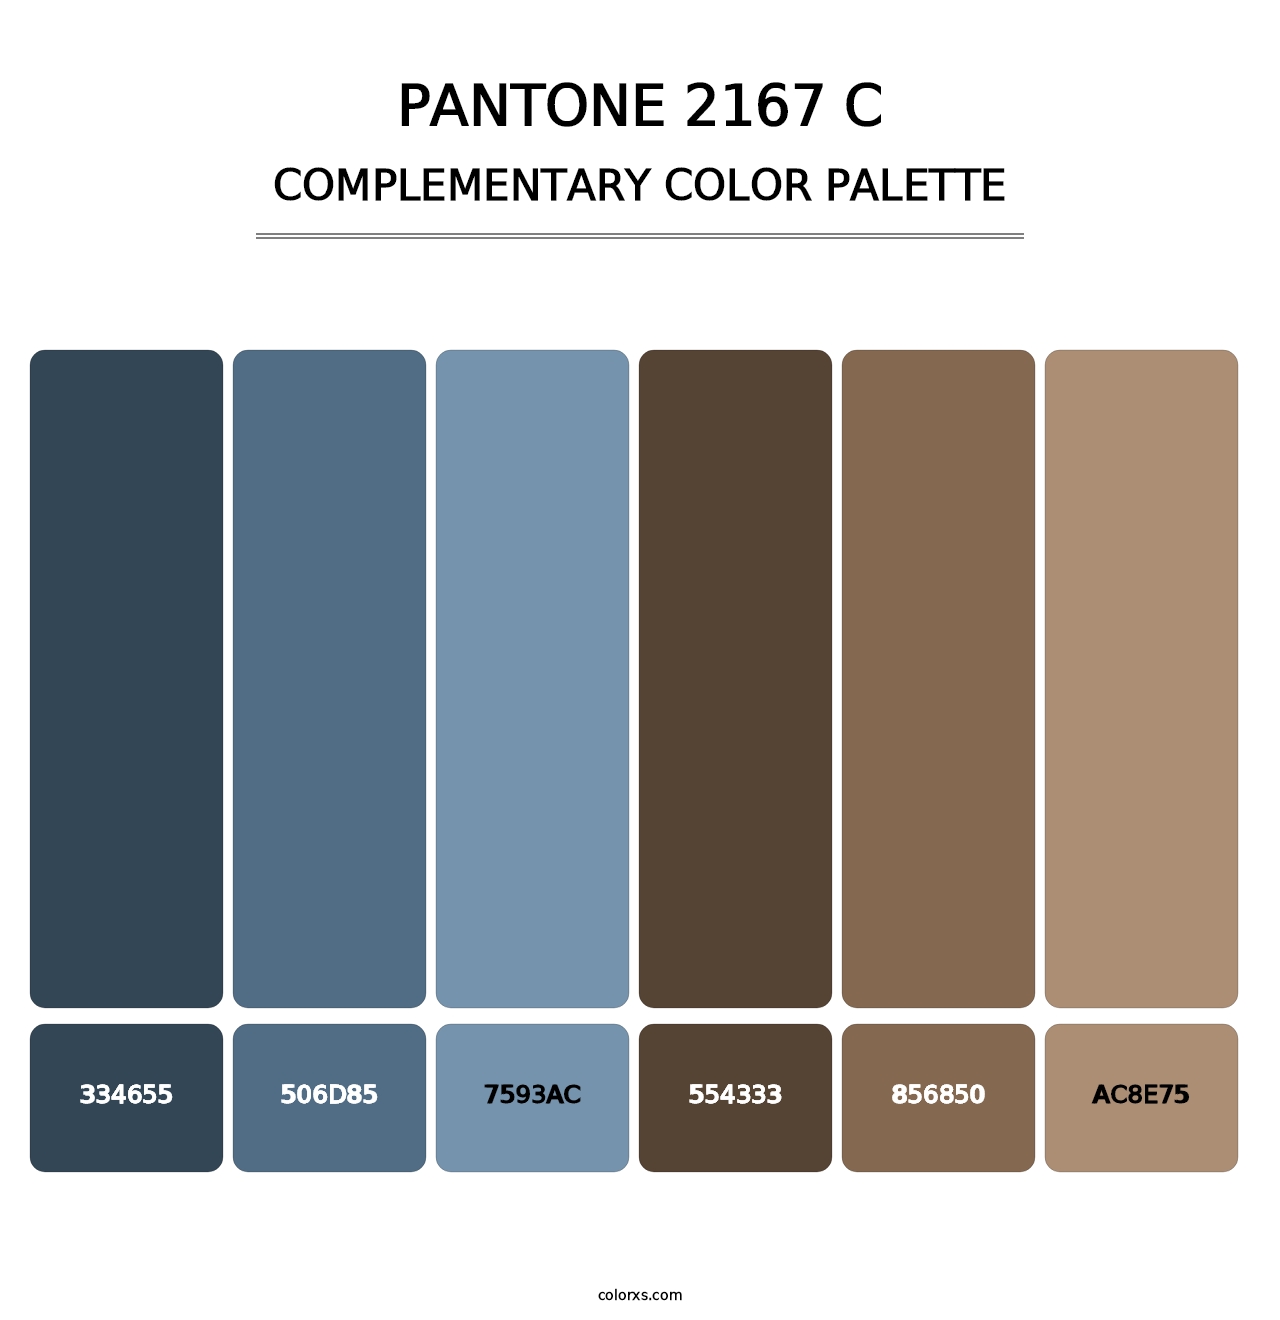 PANTONE 2167 C - Complementary Color Palette